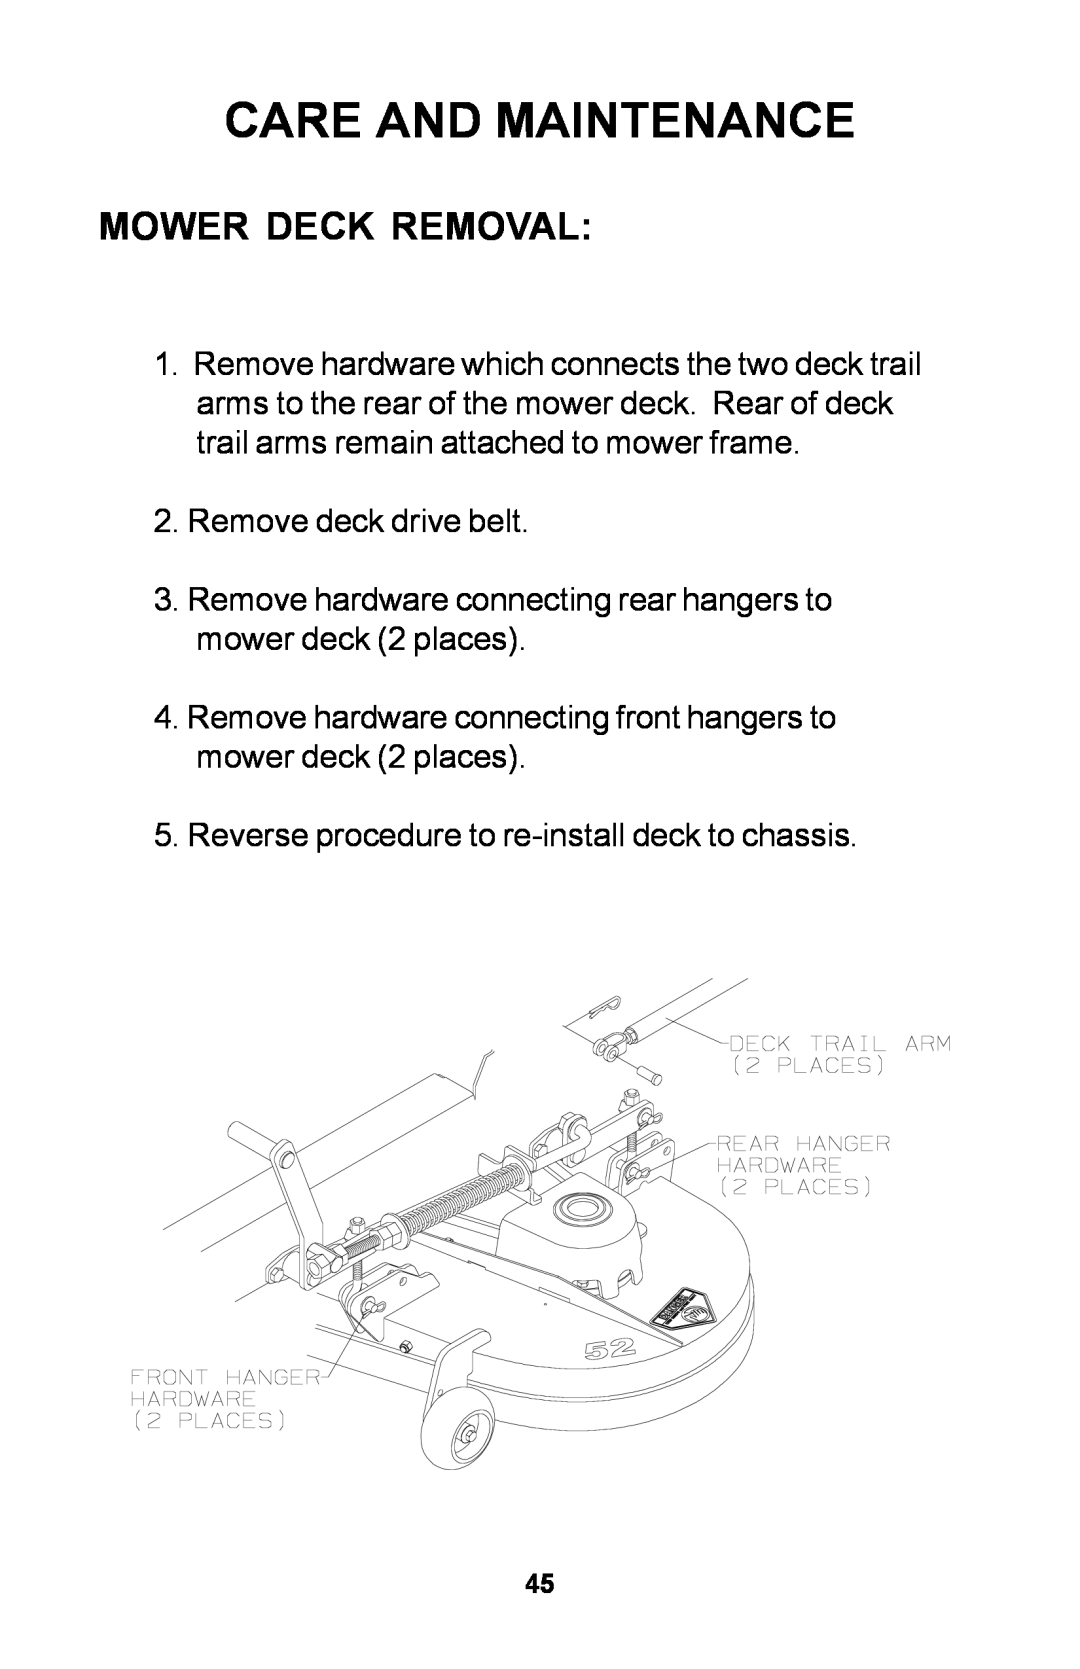 Dixon ZTR manual Mower Deck Removal, Care And Maintenance, Remove deck drive belt 